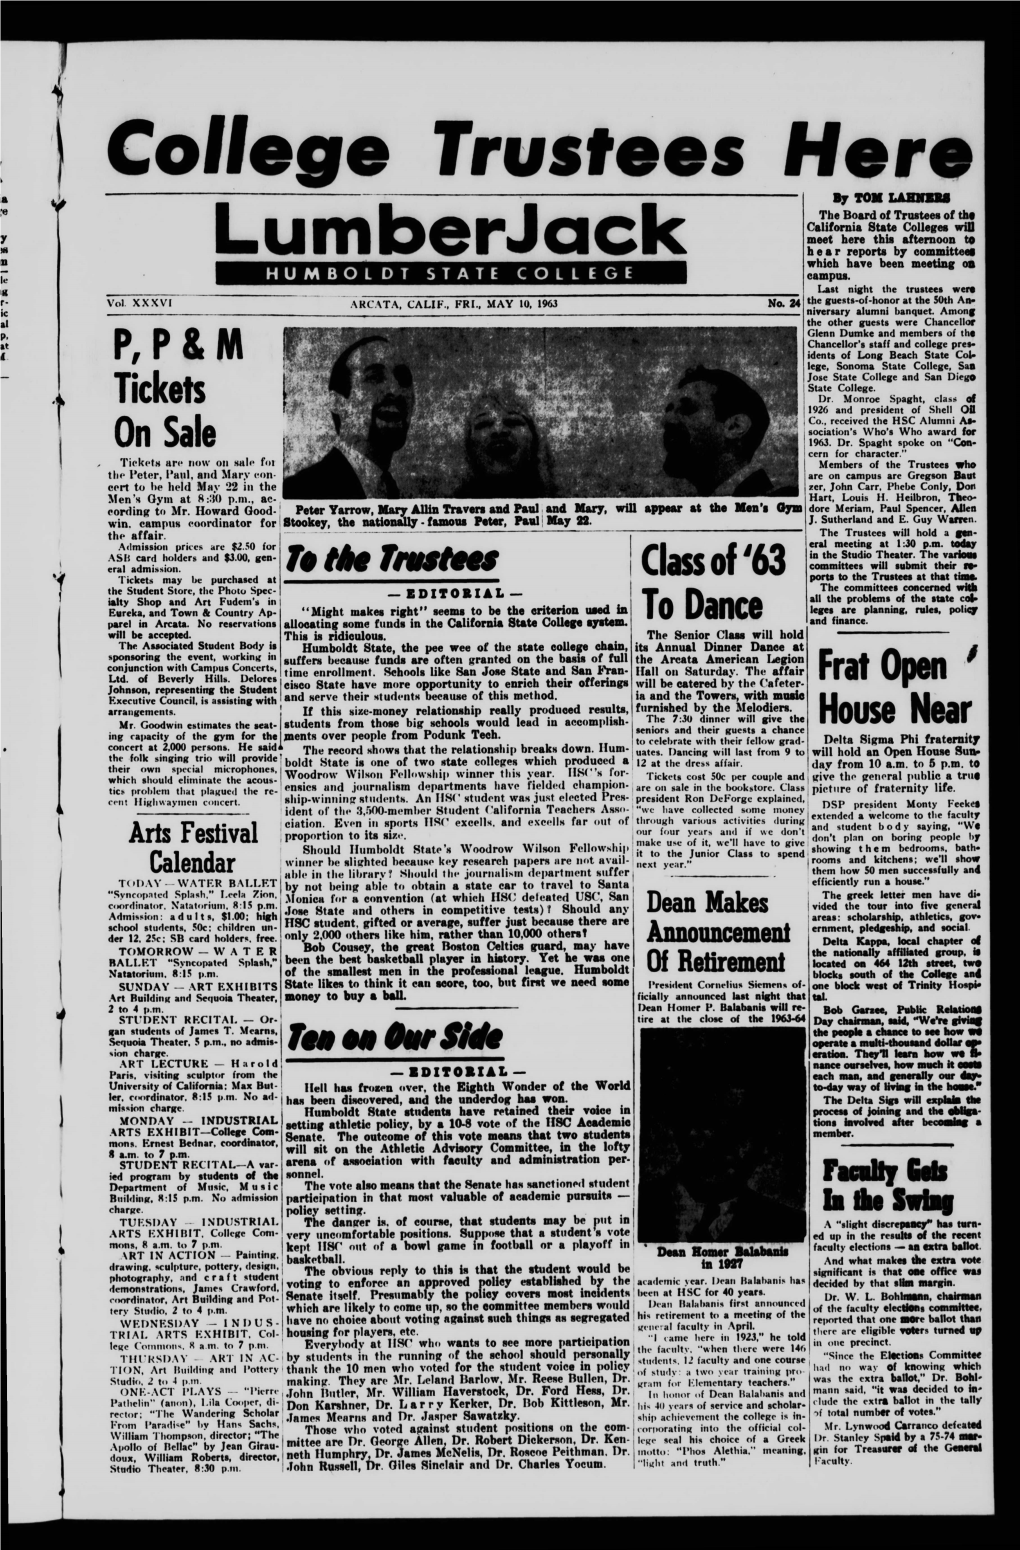 The Lumberjack, May 10, 1963